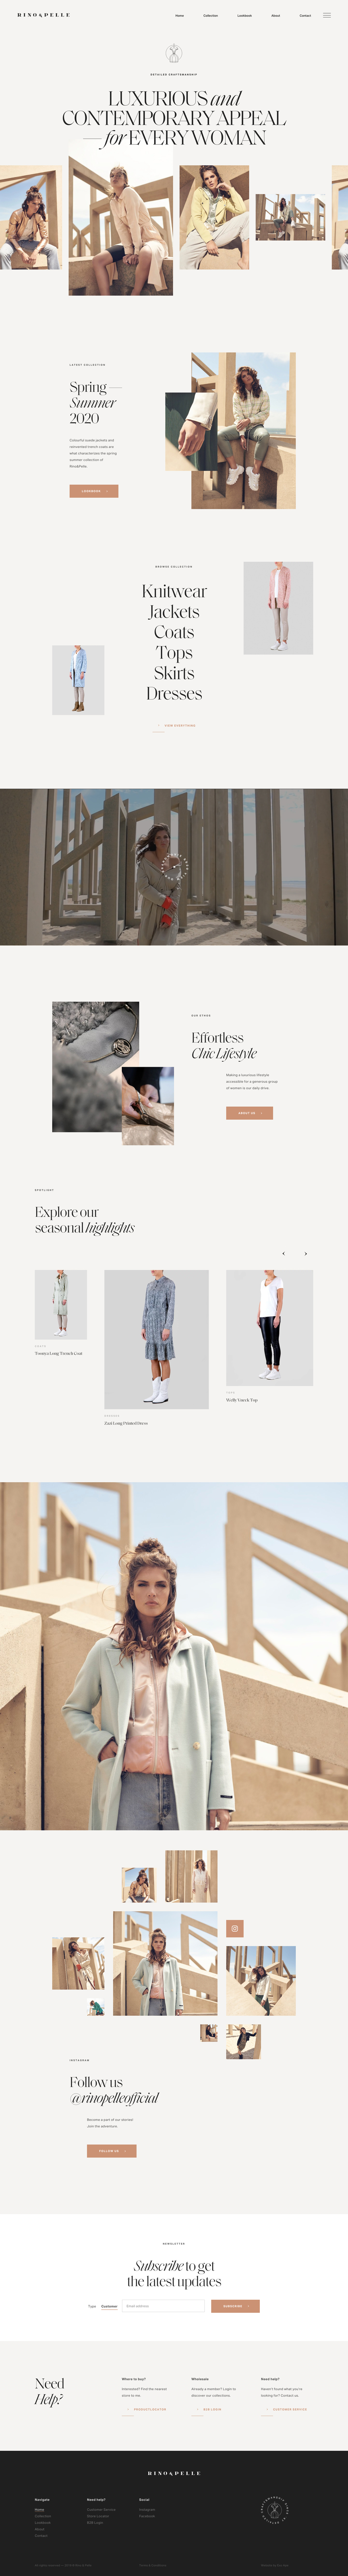 Rino & Pelle女装品牌网站设计